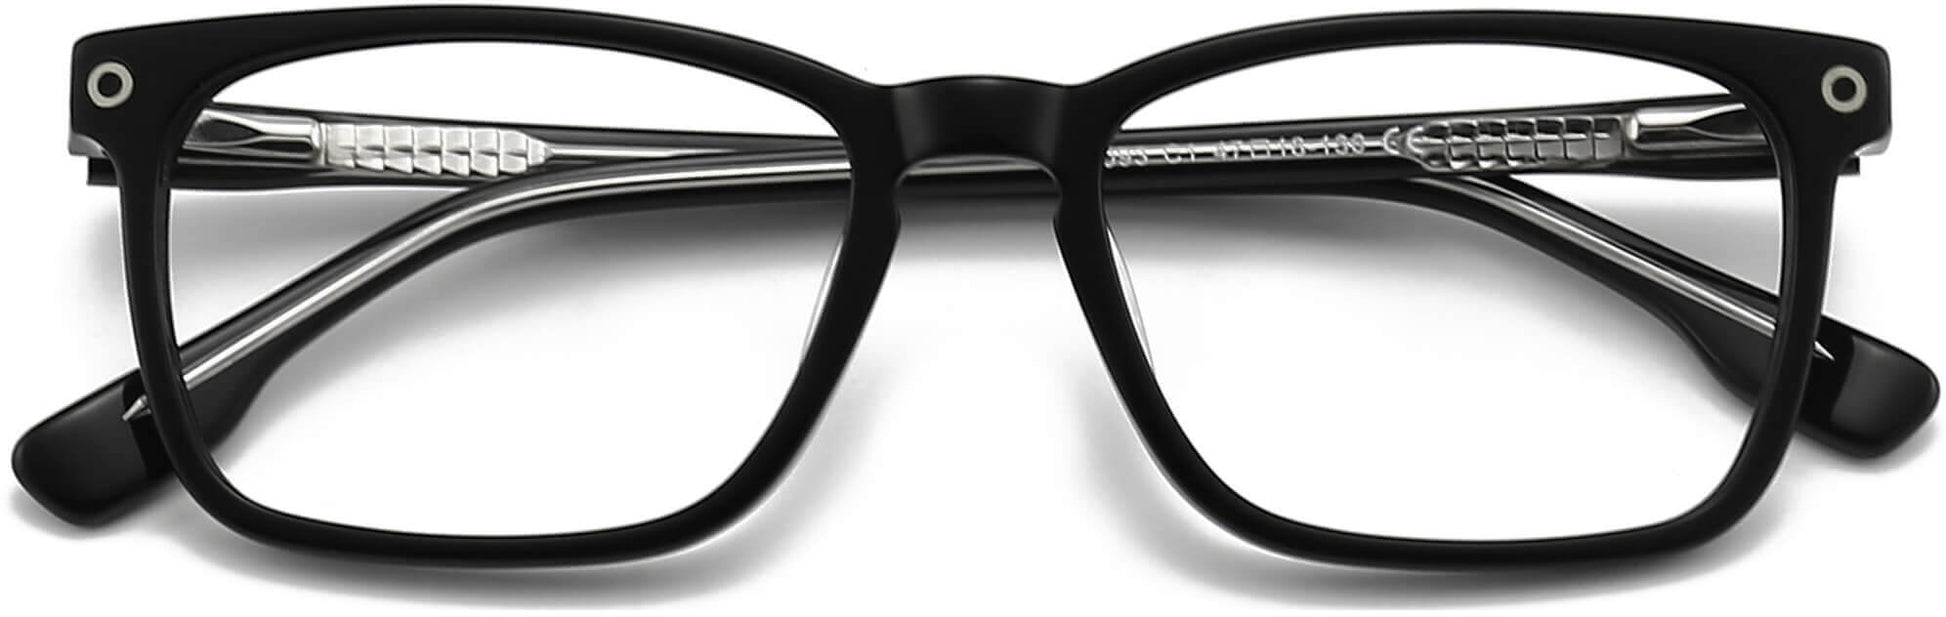 Eliana Square Black Eyeglasses from ANRRI, closed view